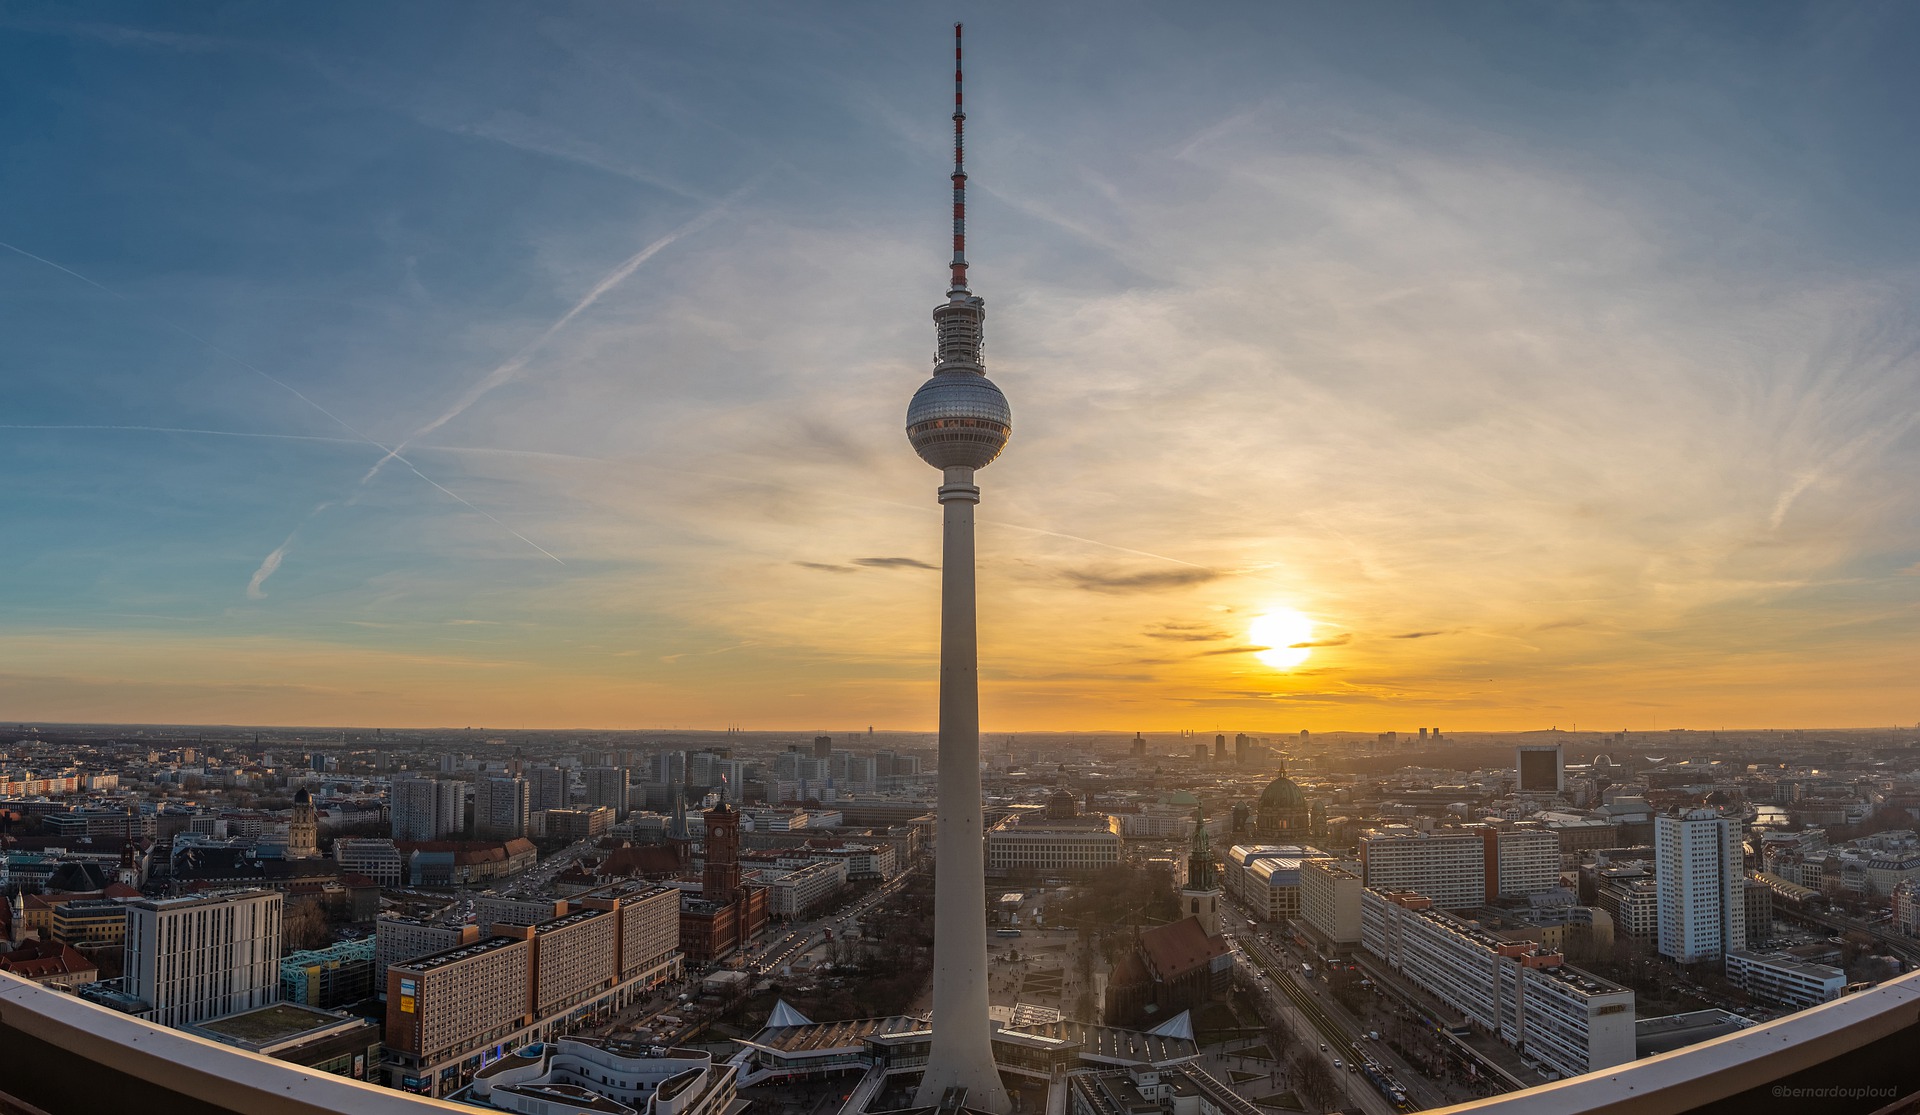 Berliner Fernsehturm im Sonnenuntergang